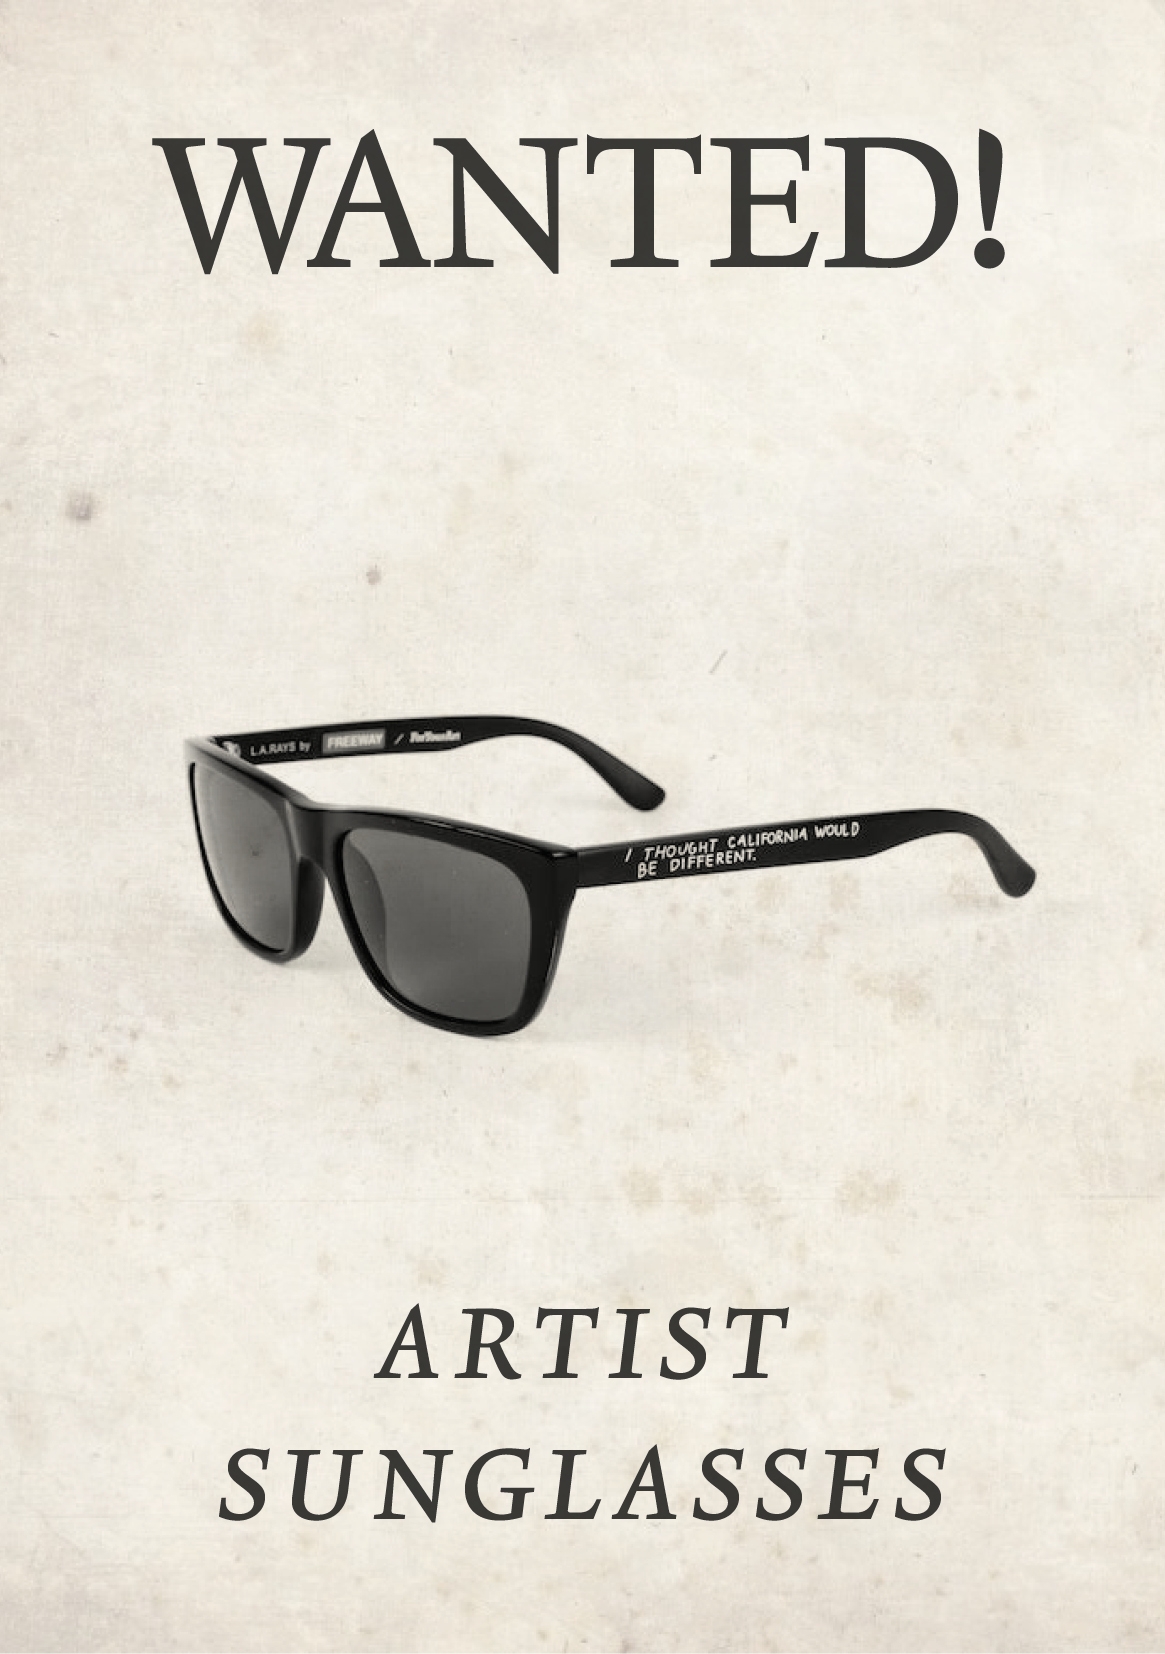 Wanted! Artist Sunglasses